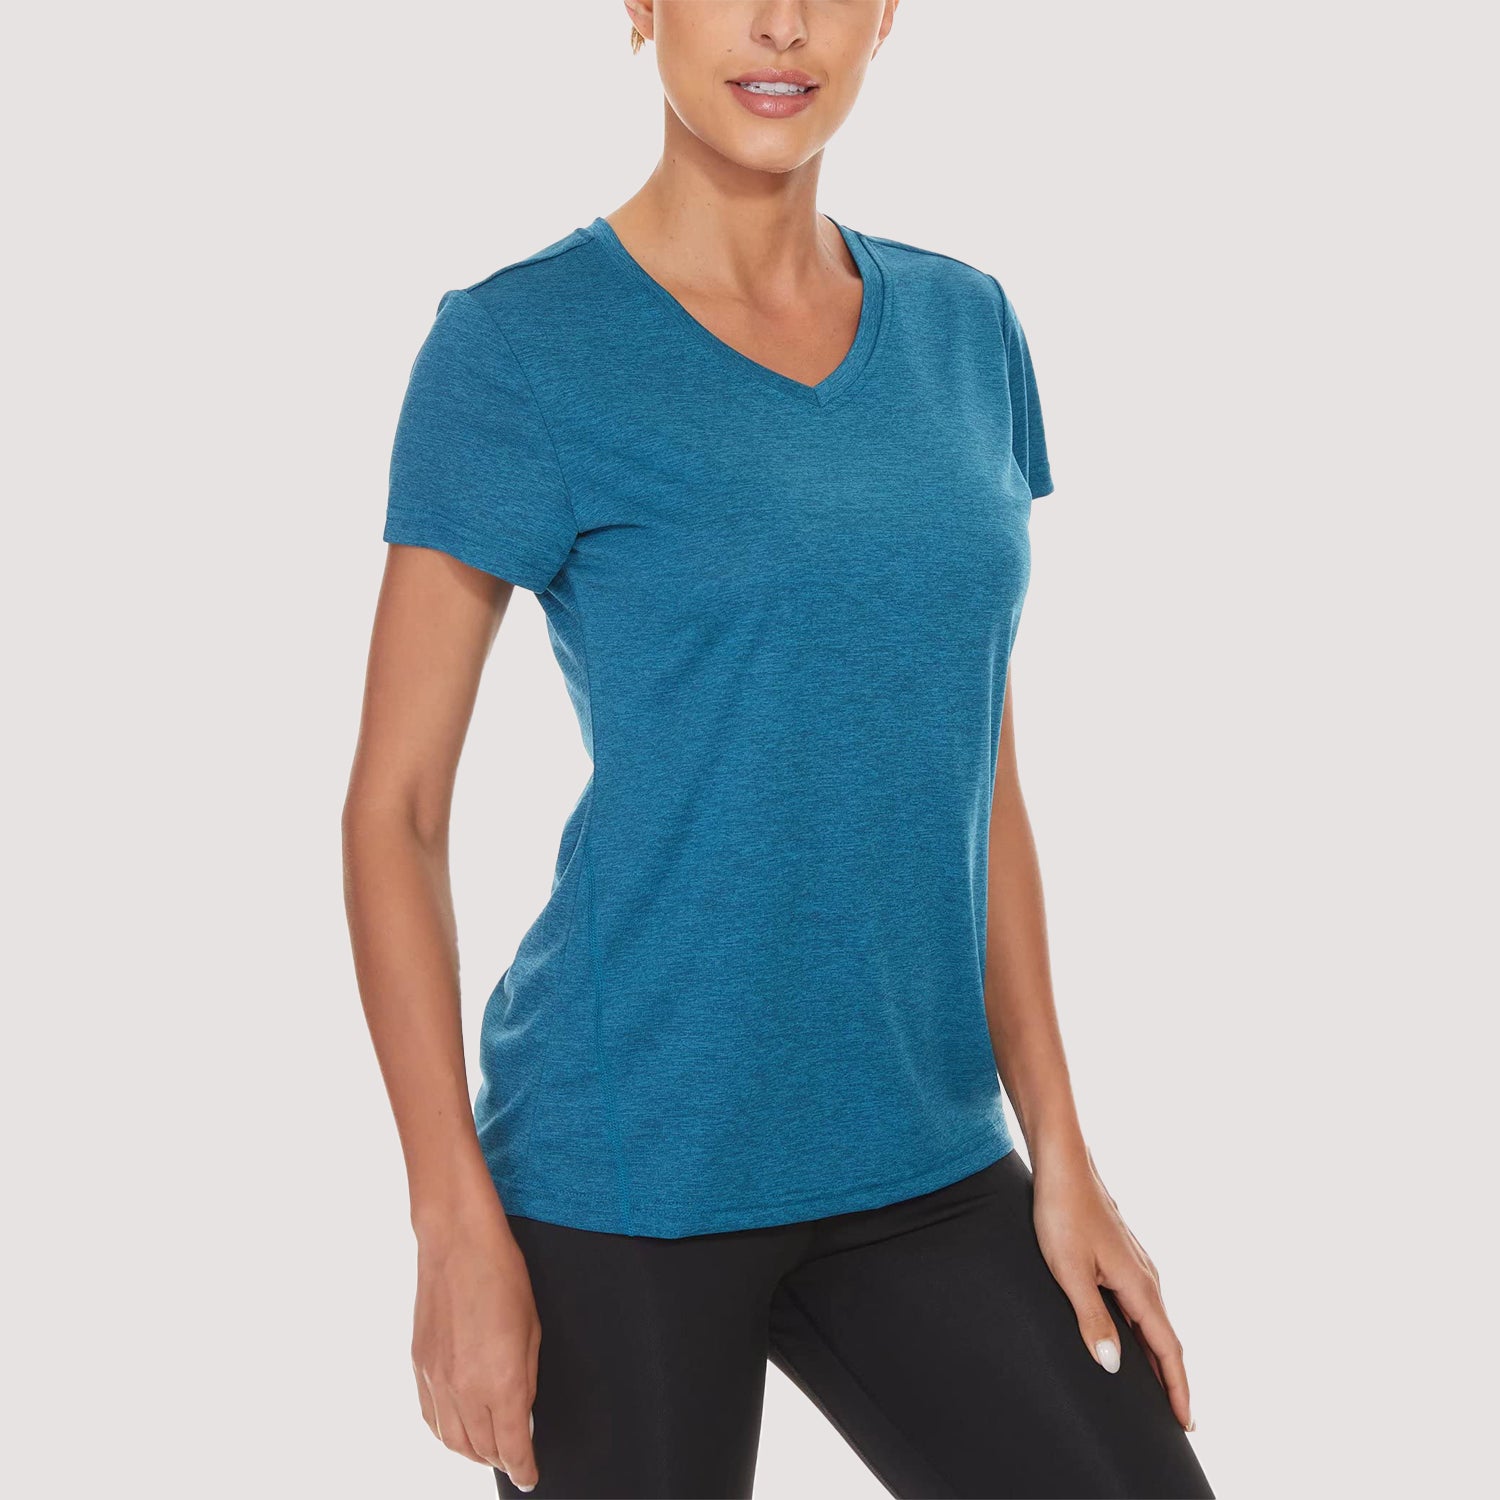 Women's Running T-Shirt Quick Dry V-Neck Yoga Top Tee Shirts